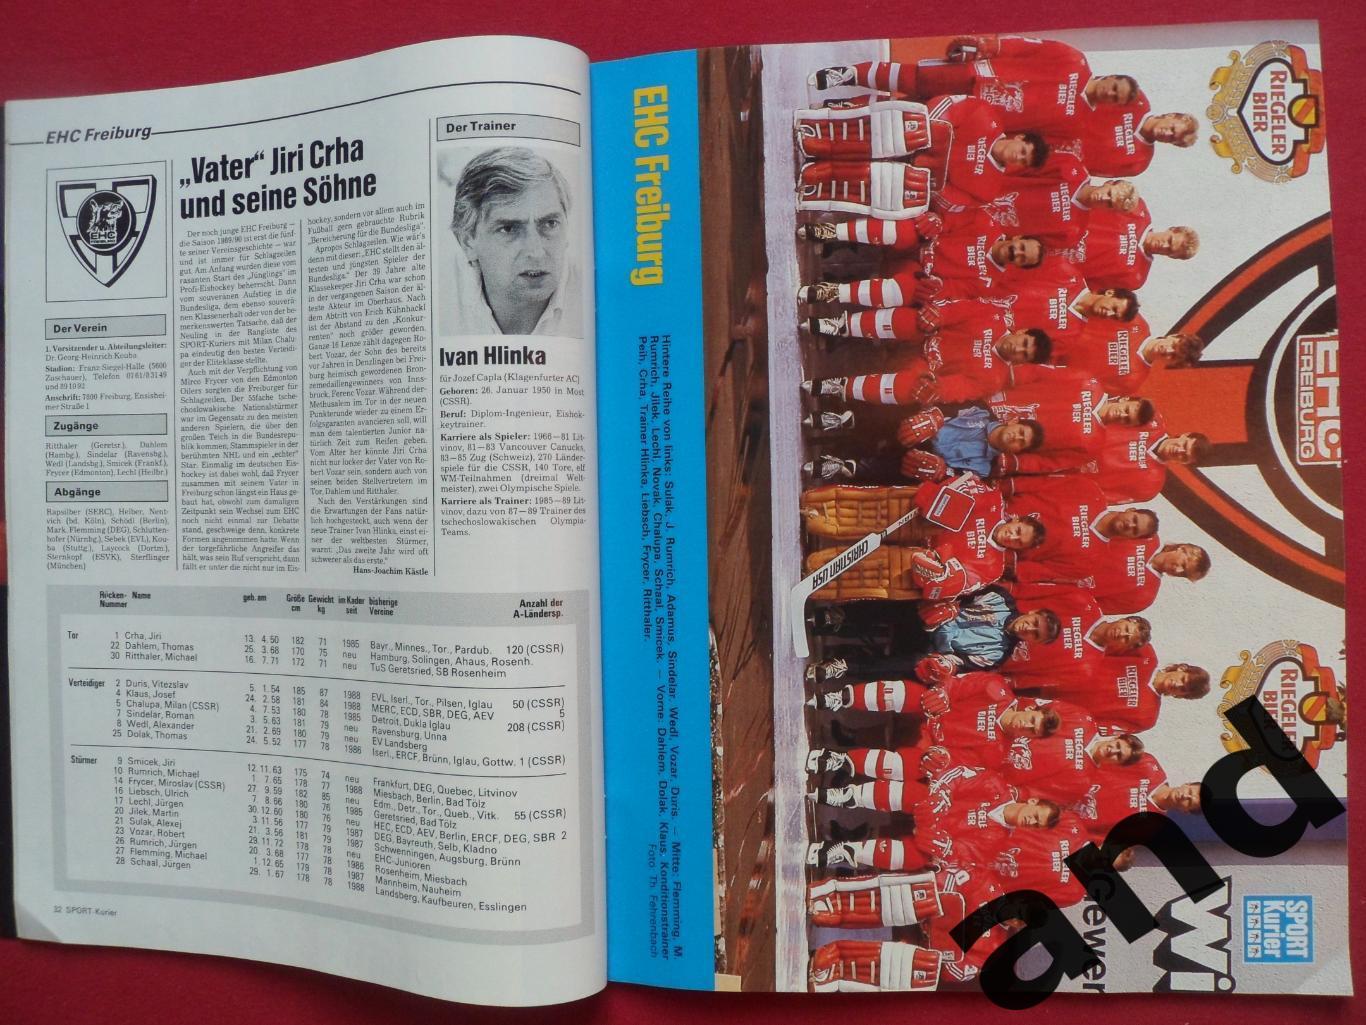 журнал Спорт Курьер ФРГ. Хоккей Бундеслига (спецвыпуск) 1989-90 (постеры команд) 4